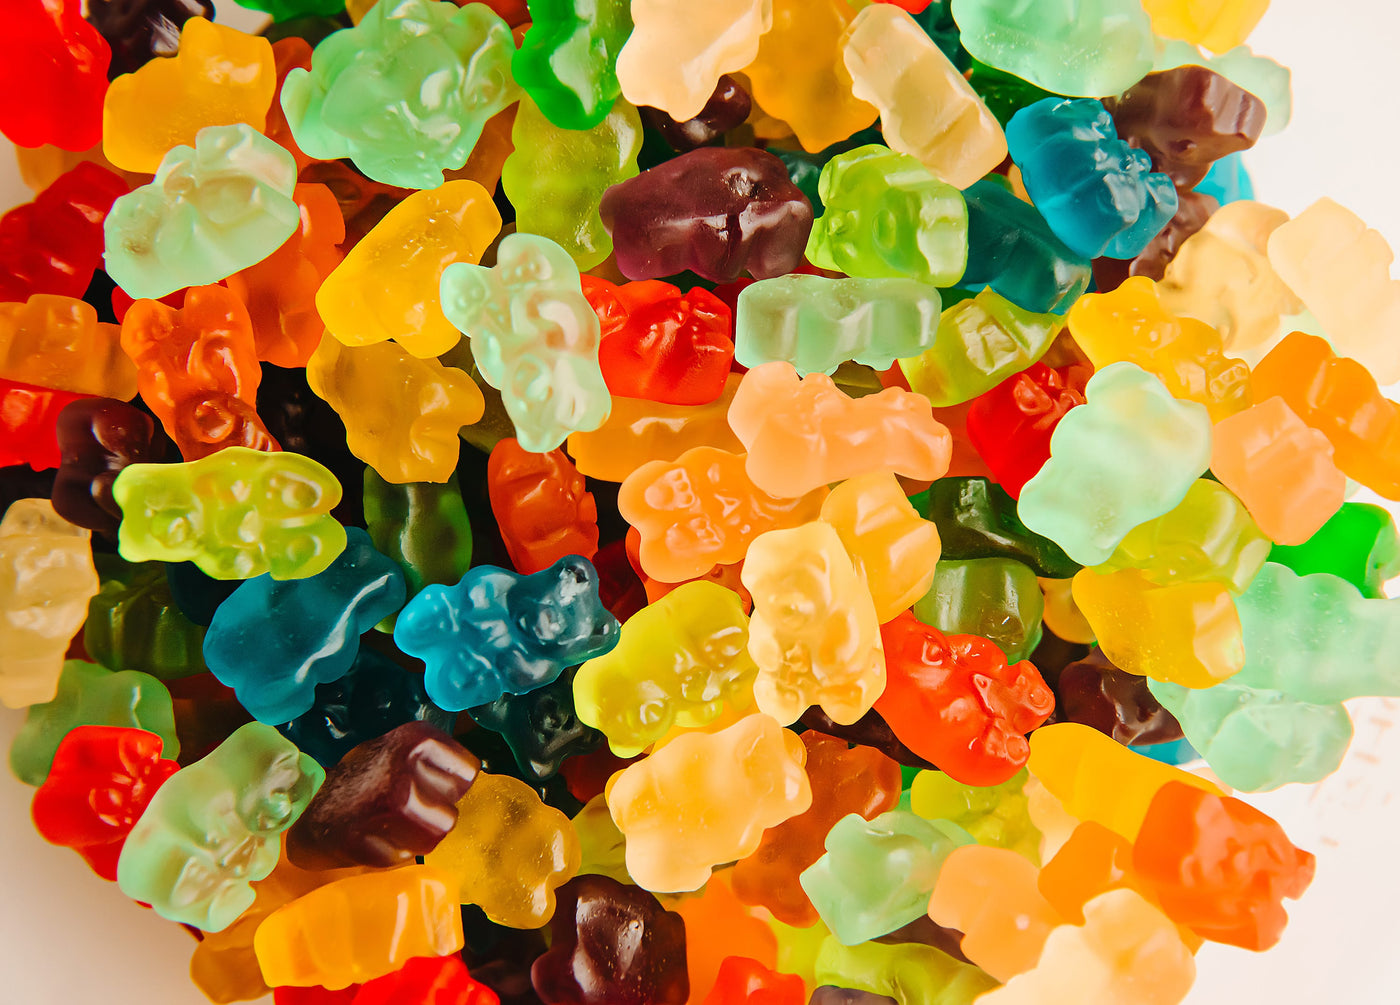 Chocolate Gummy Bears